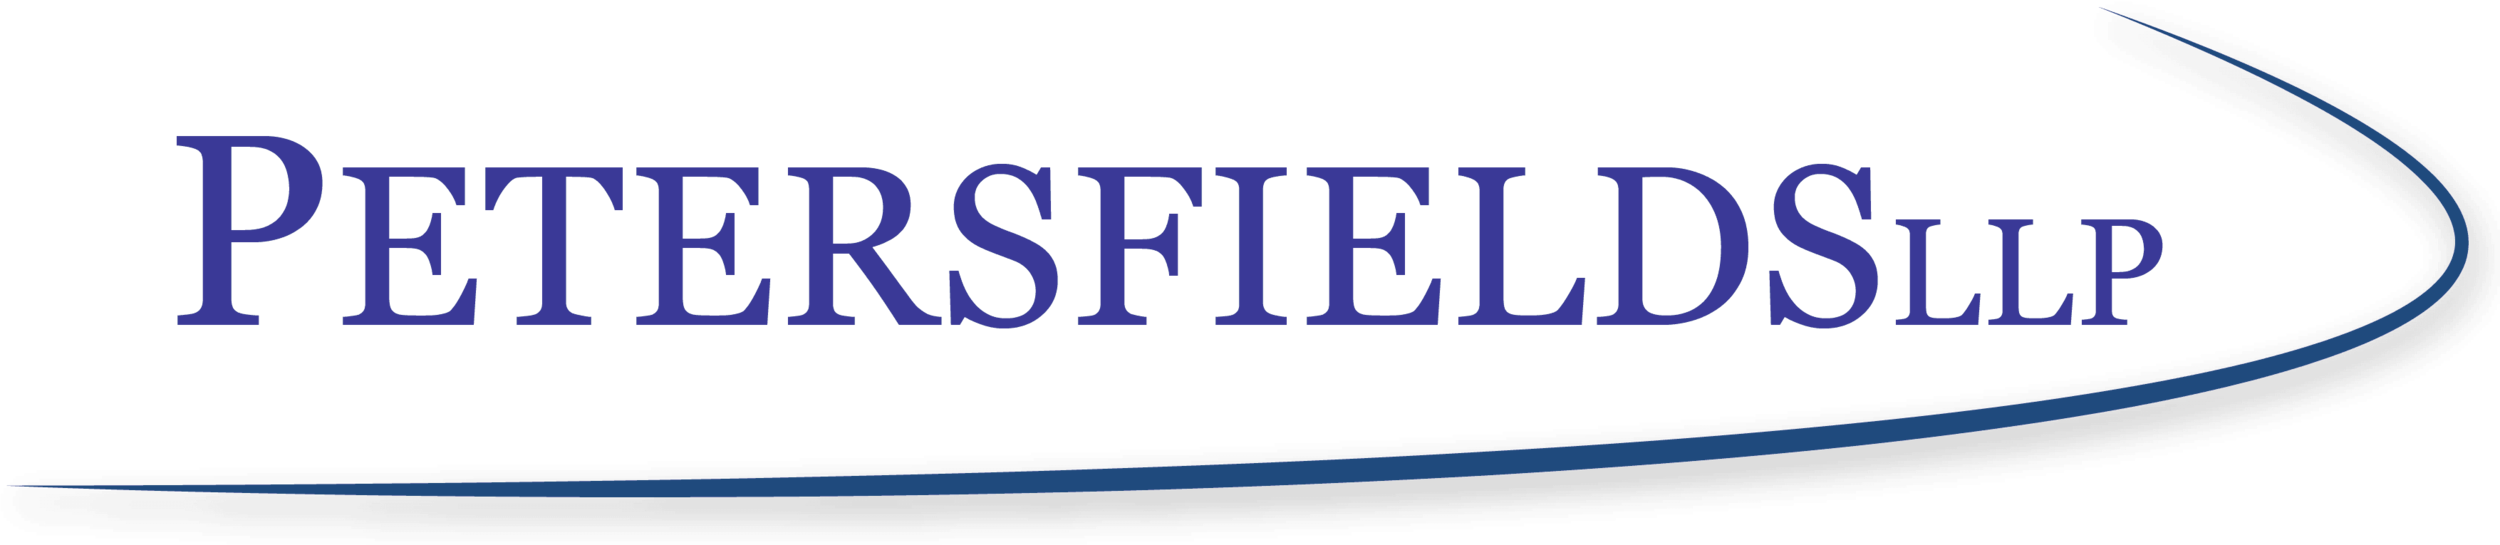 petersfields-logo.png